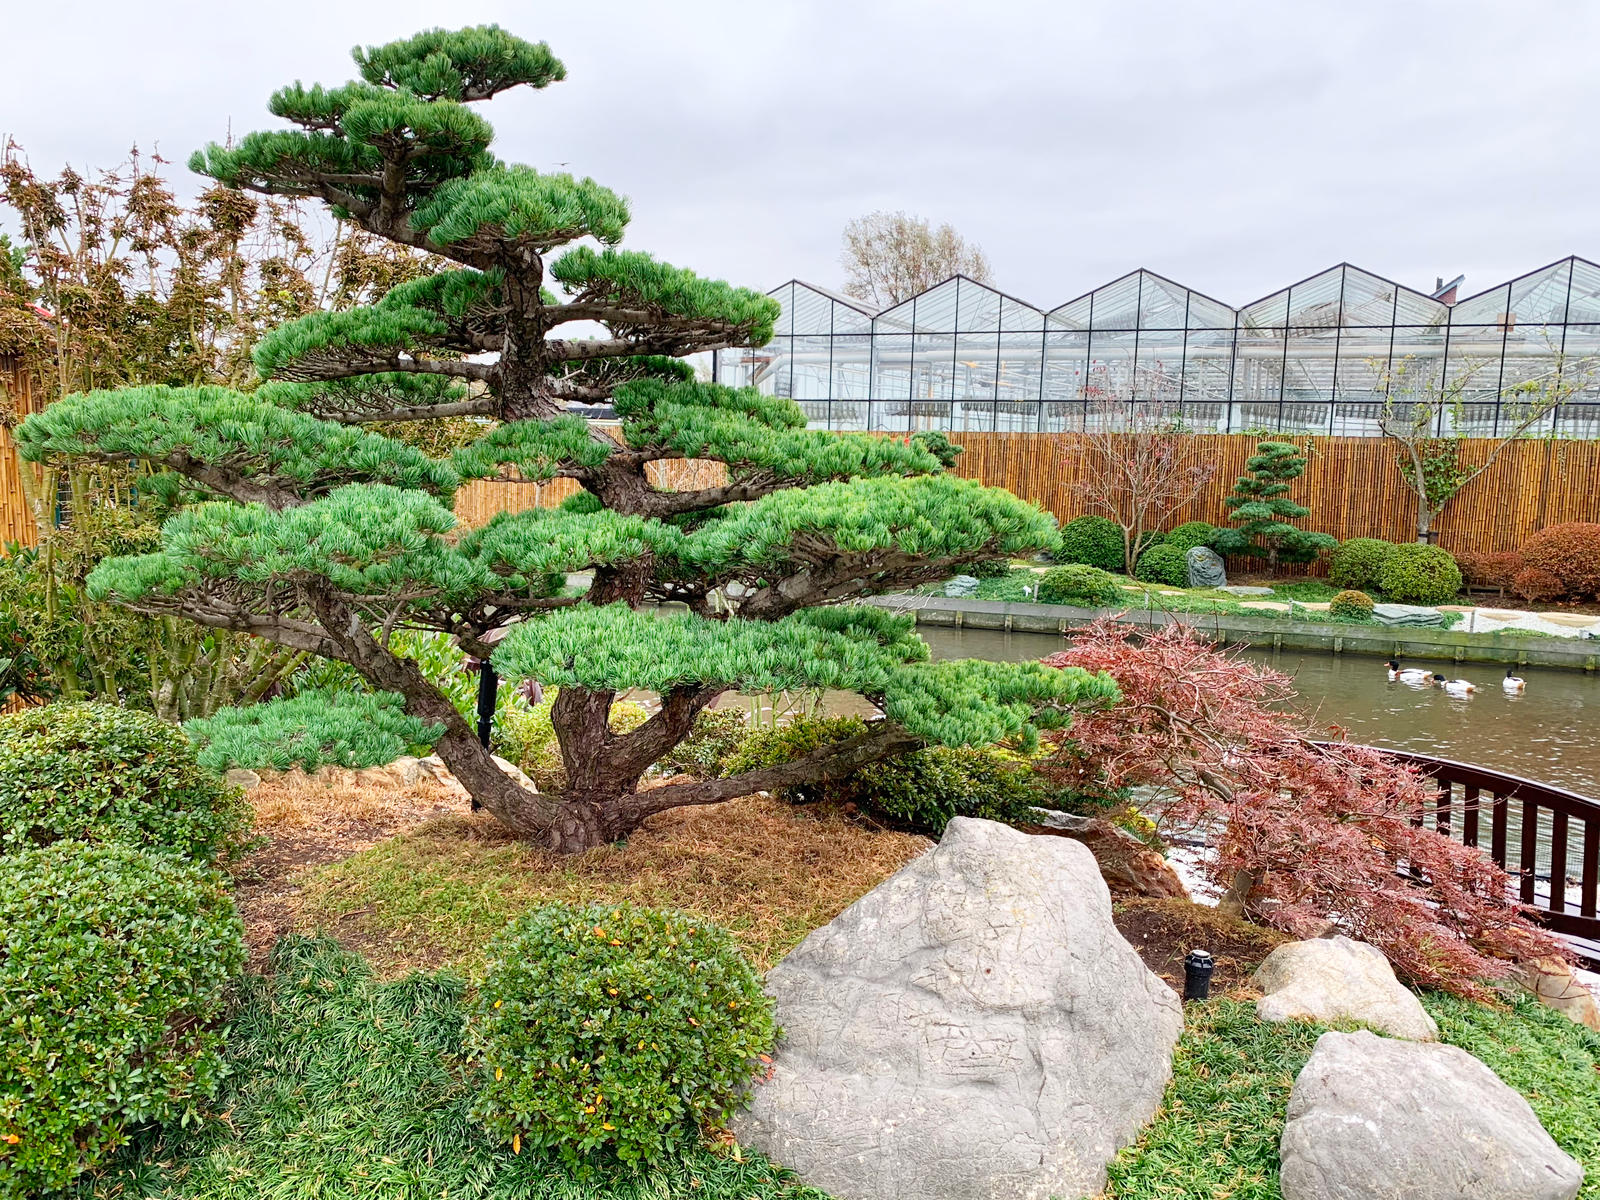 Japanese Niwaki Trees and Plants for Sale, White Pine Landscape